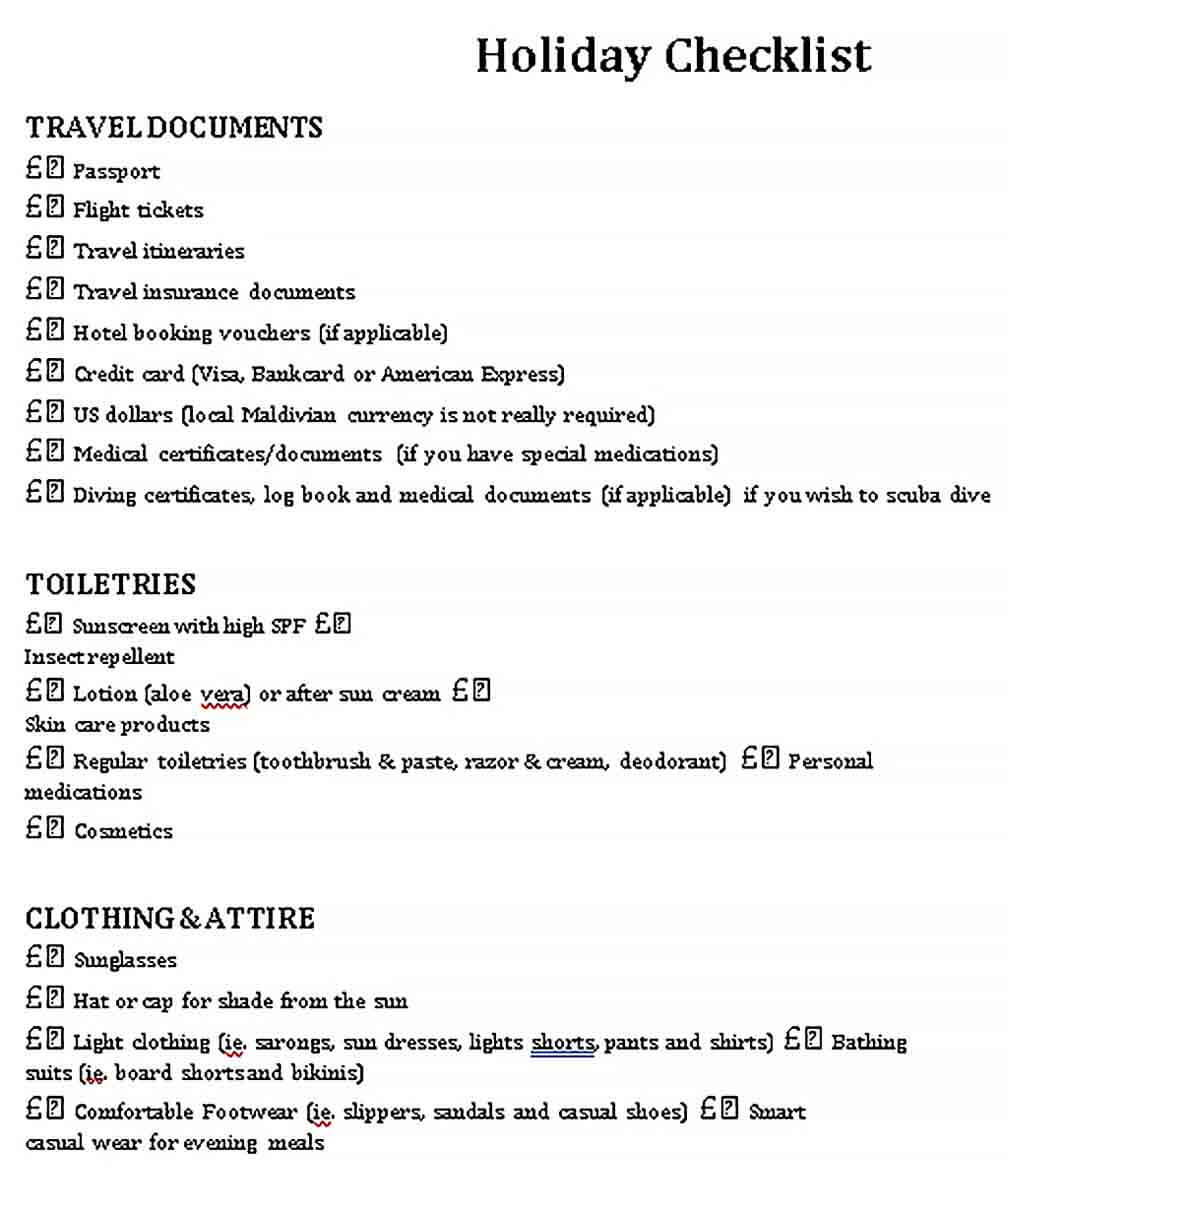 Sample Holiday Checklist Sample